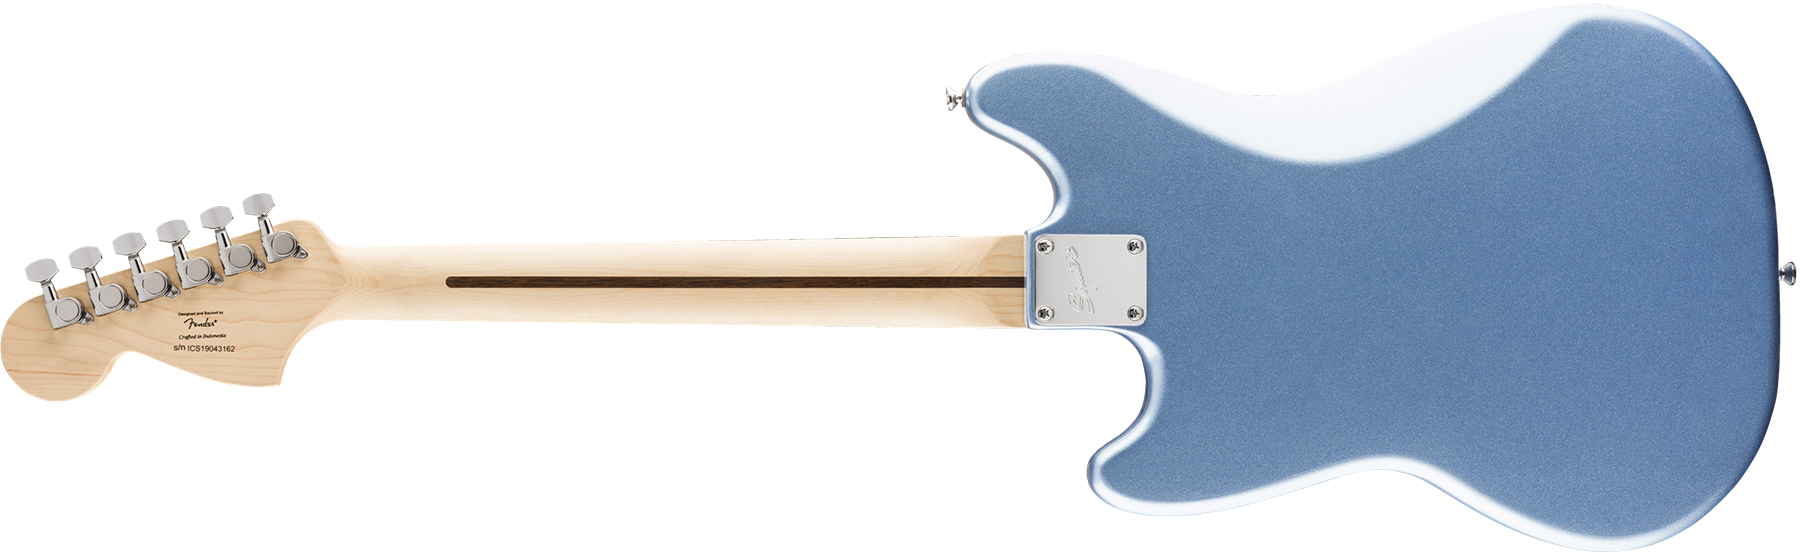 Squier Mustang Bullet Competition Hh Fsr Ht Lau - Lake Placid Blue - Retro rock electric guitar - Variation 1